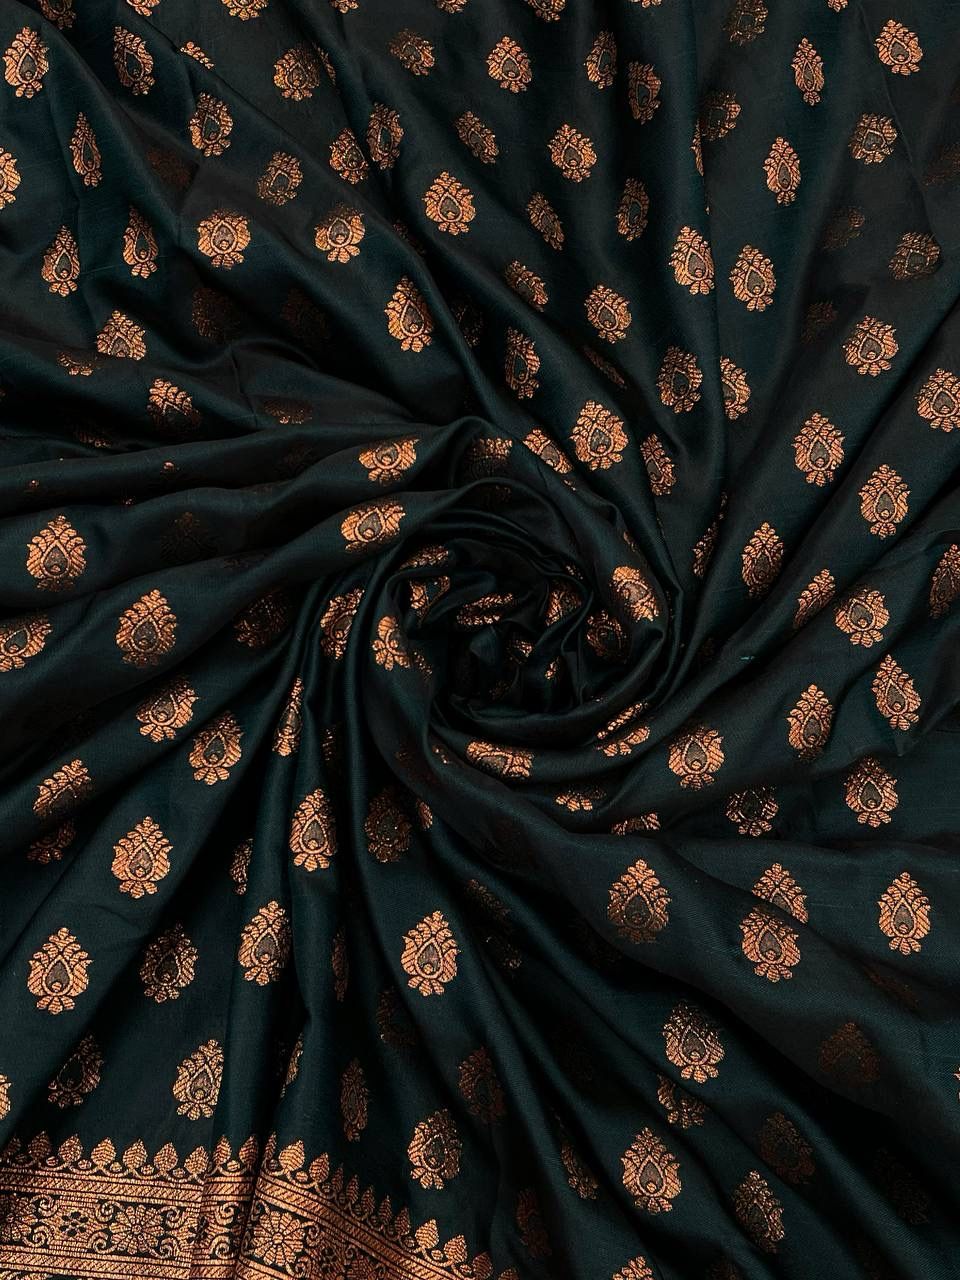 Exquisite Dark Green Soft Banarasi Silk Saree With Snappy Blouse Piece